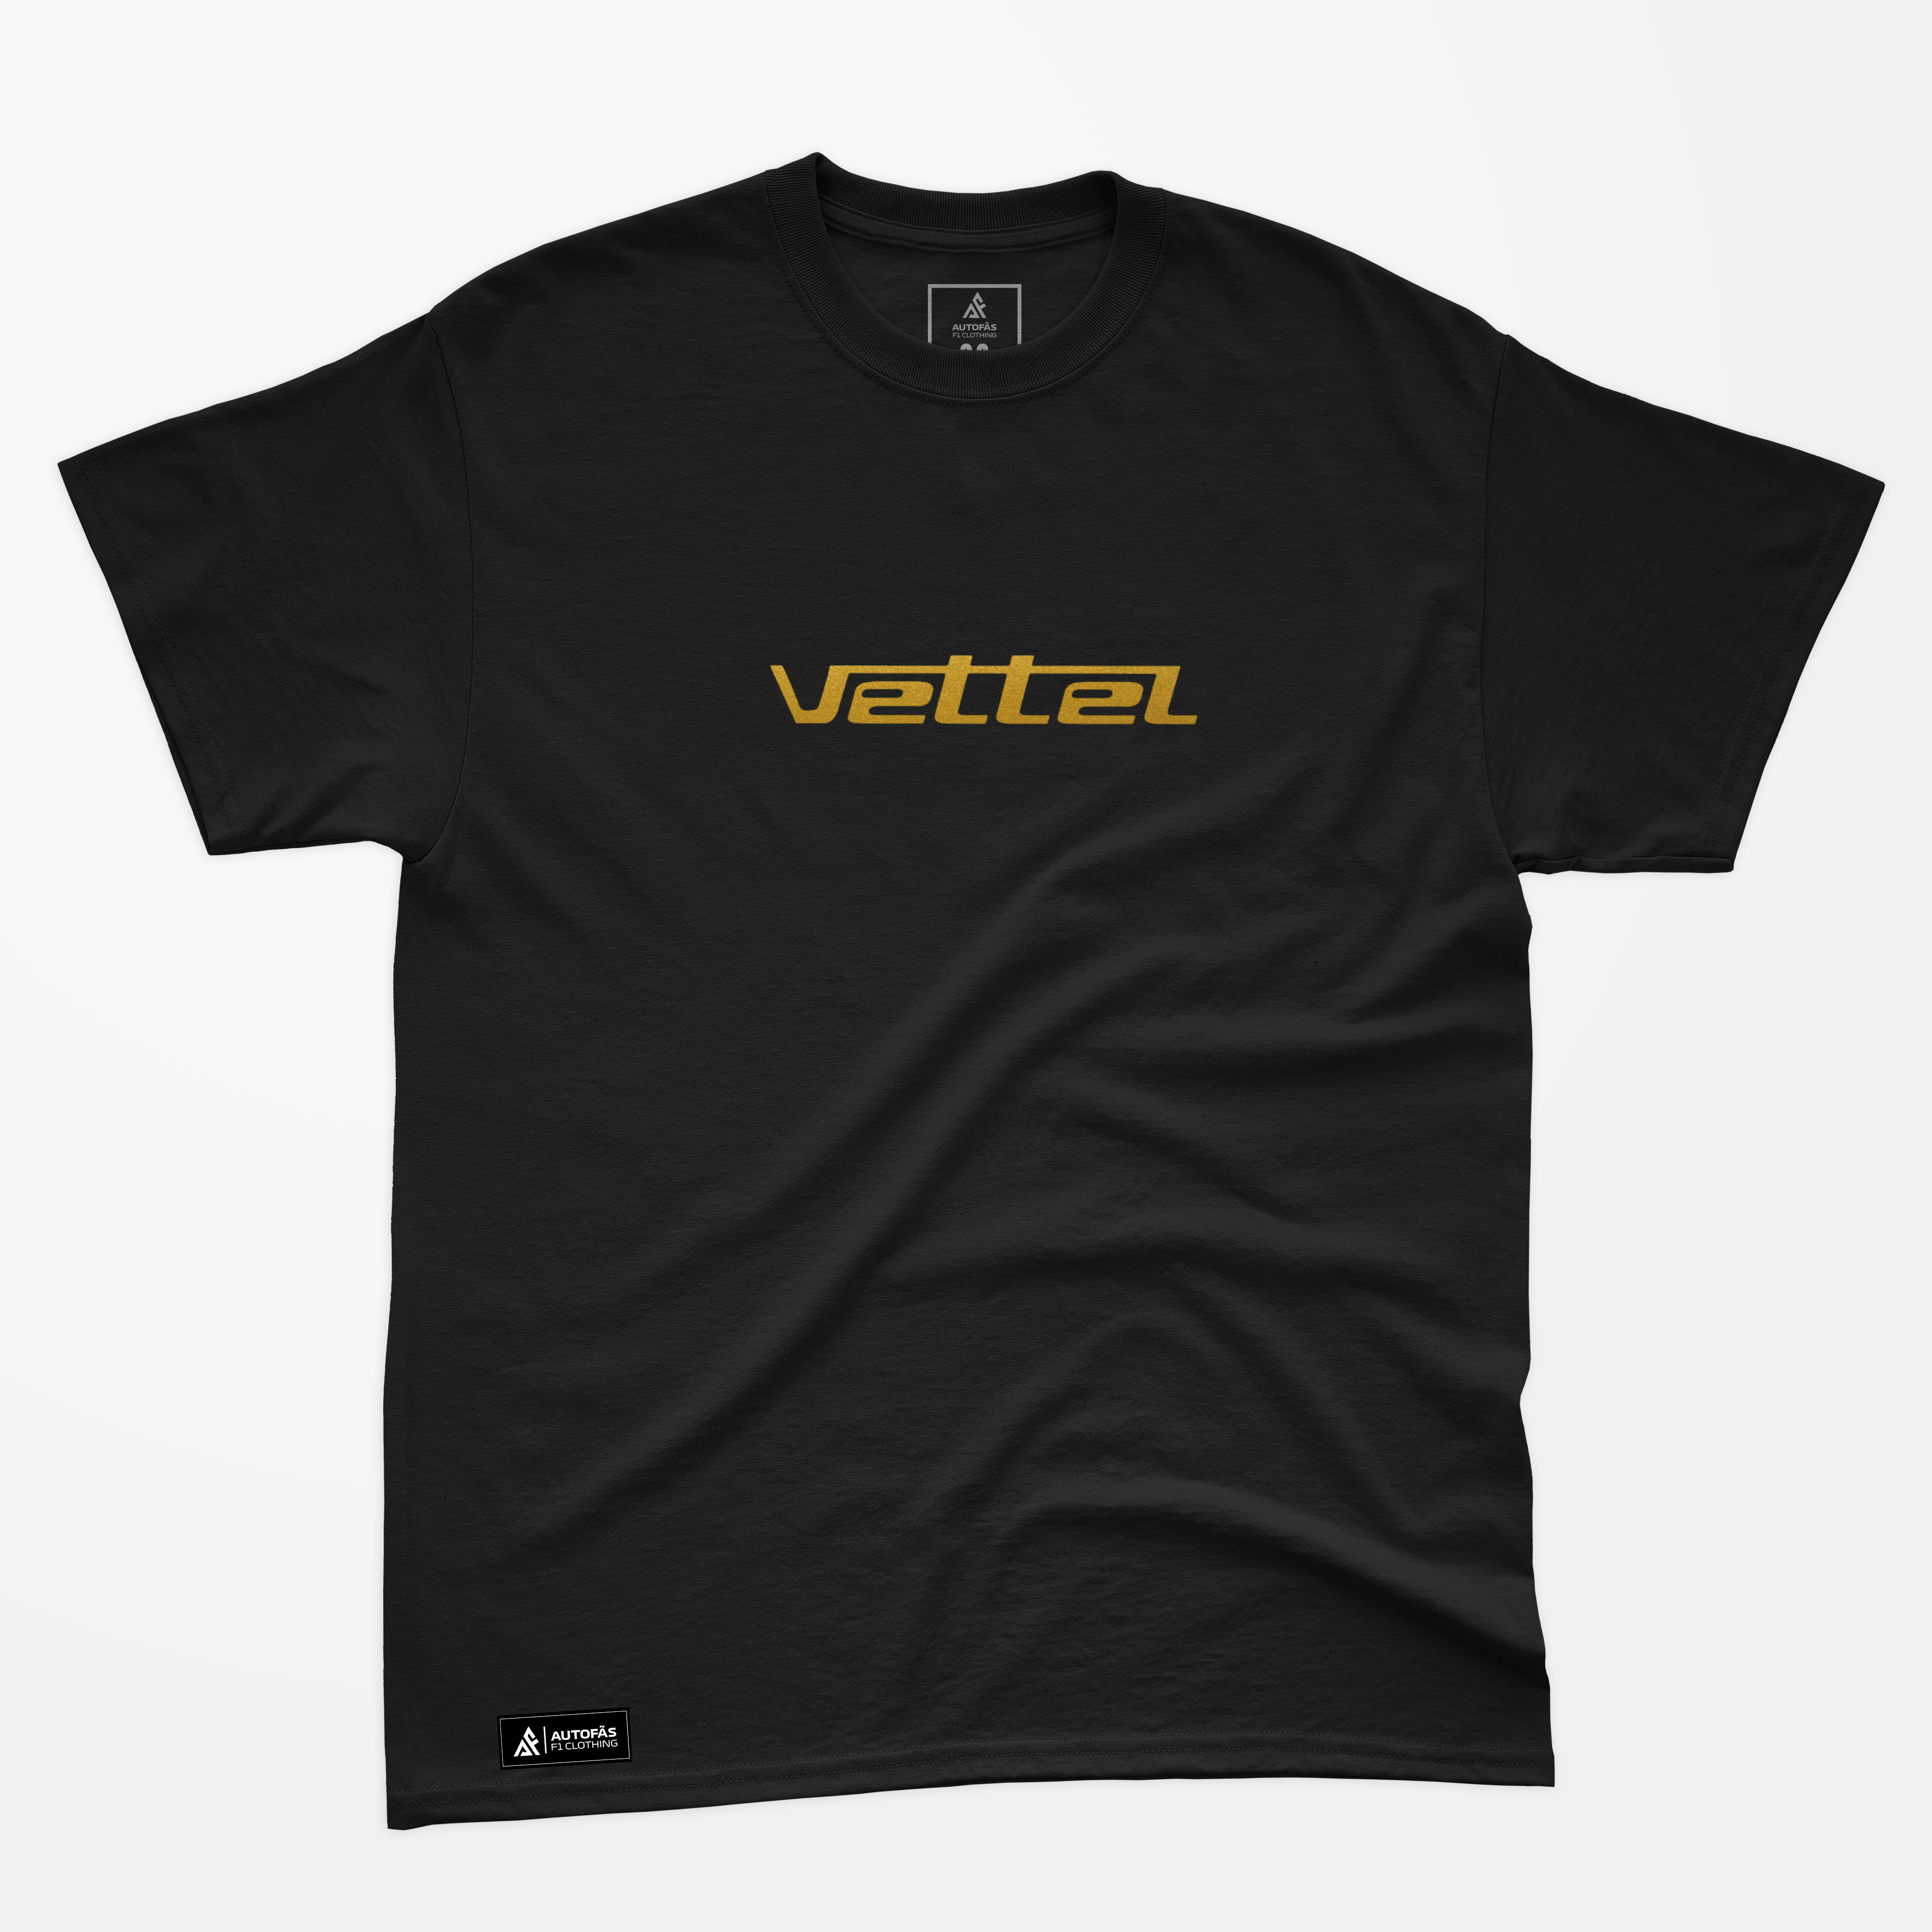 Camiseta Moments Sebastian Vettel - Autofãs Store